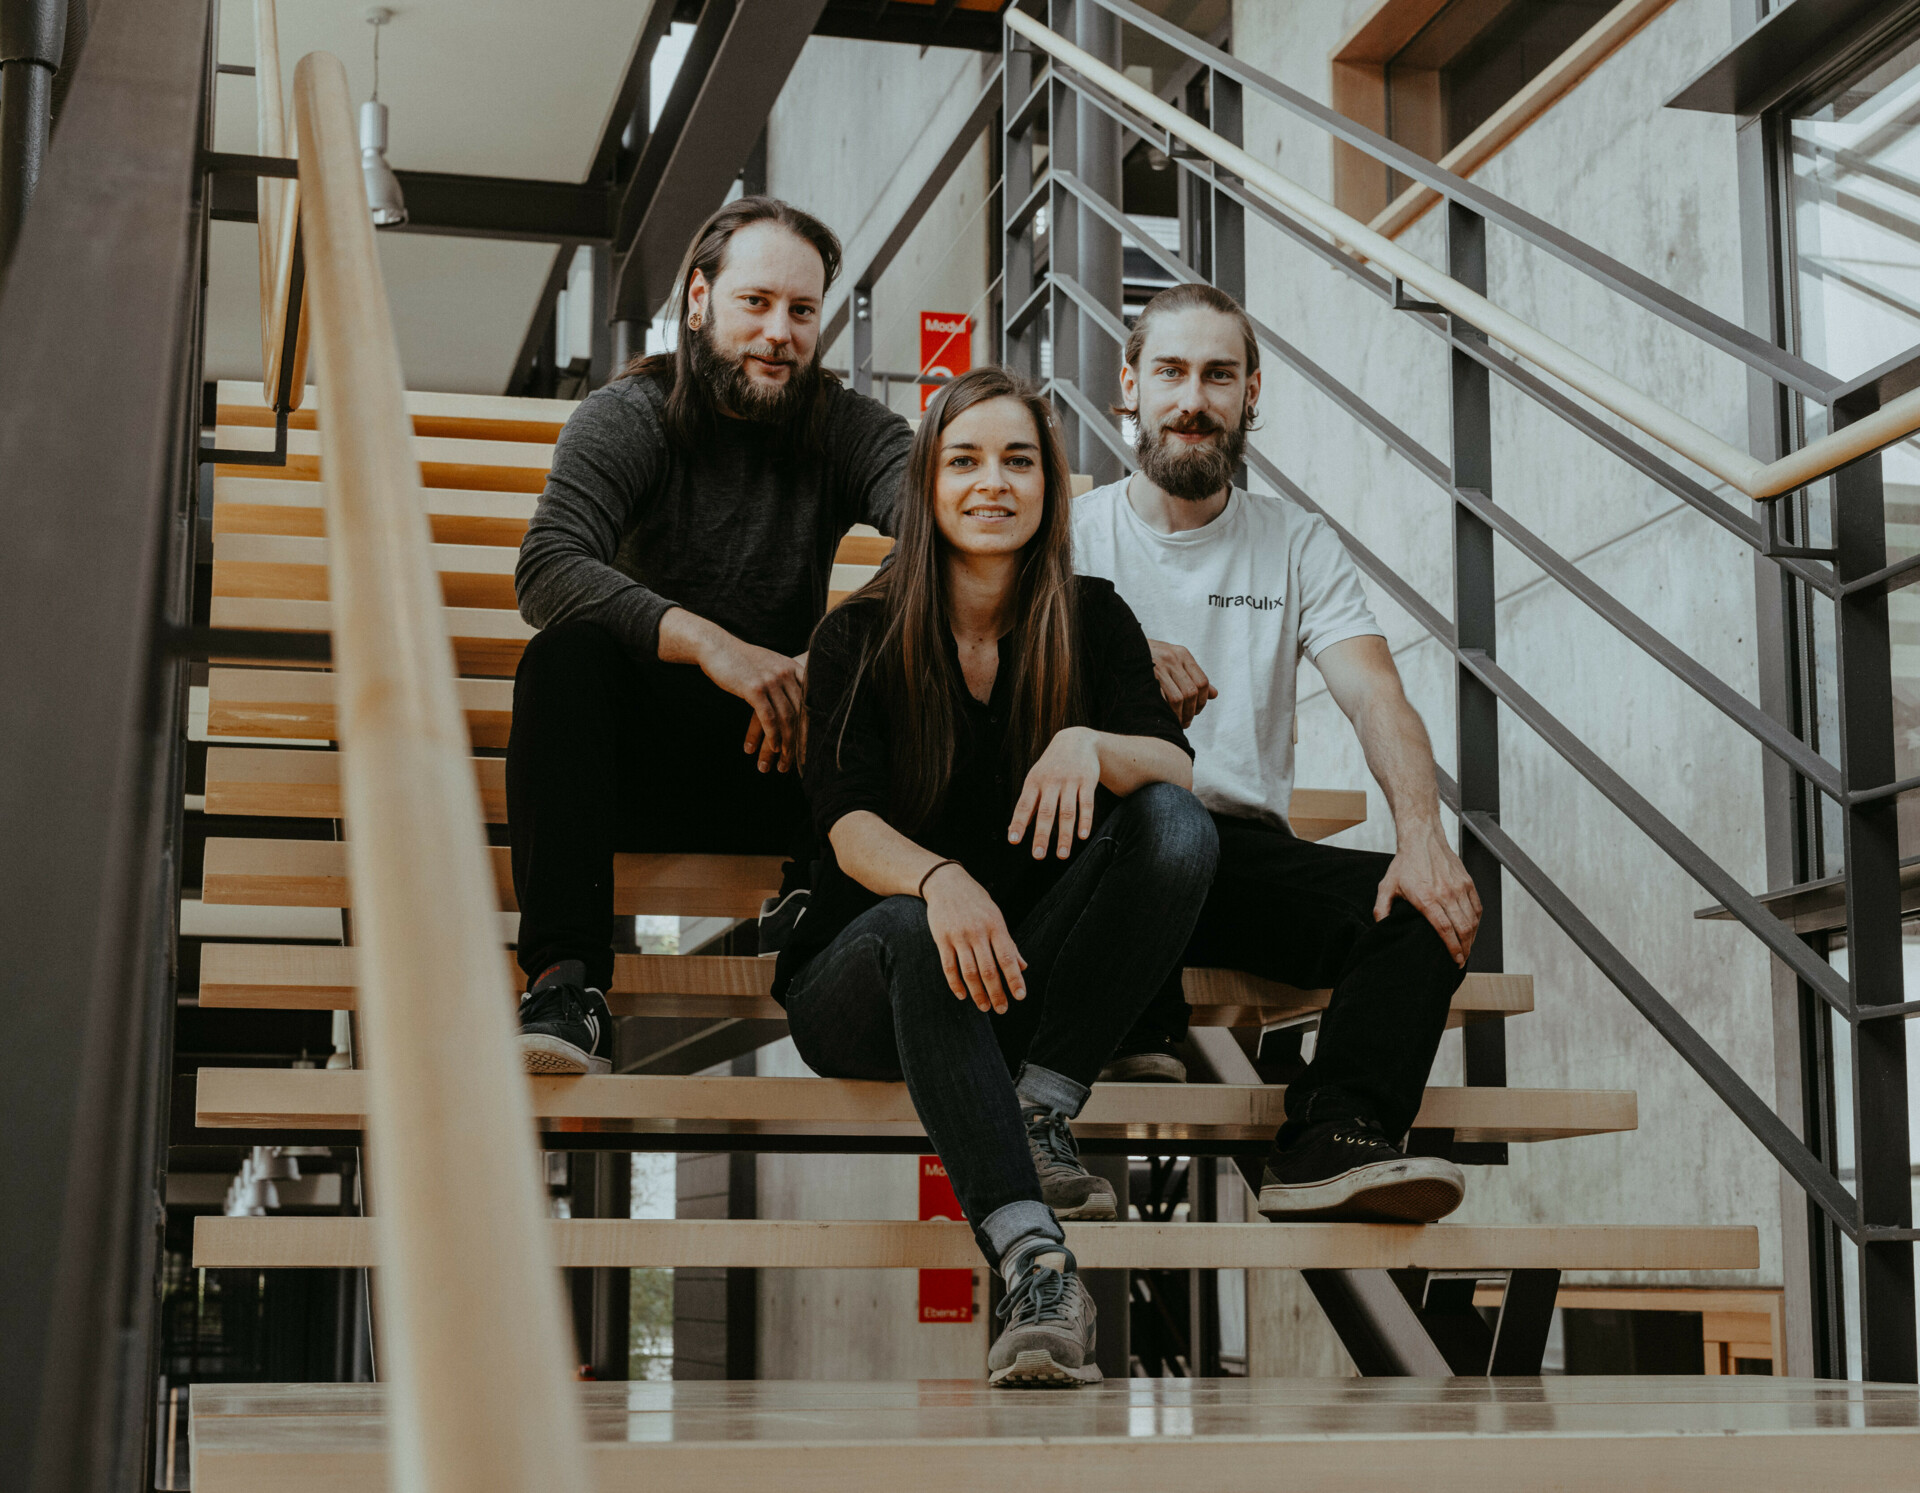 Dr. Felix Blei, Roxana Preuß and Frank Junger sitting as a team on a staircase